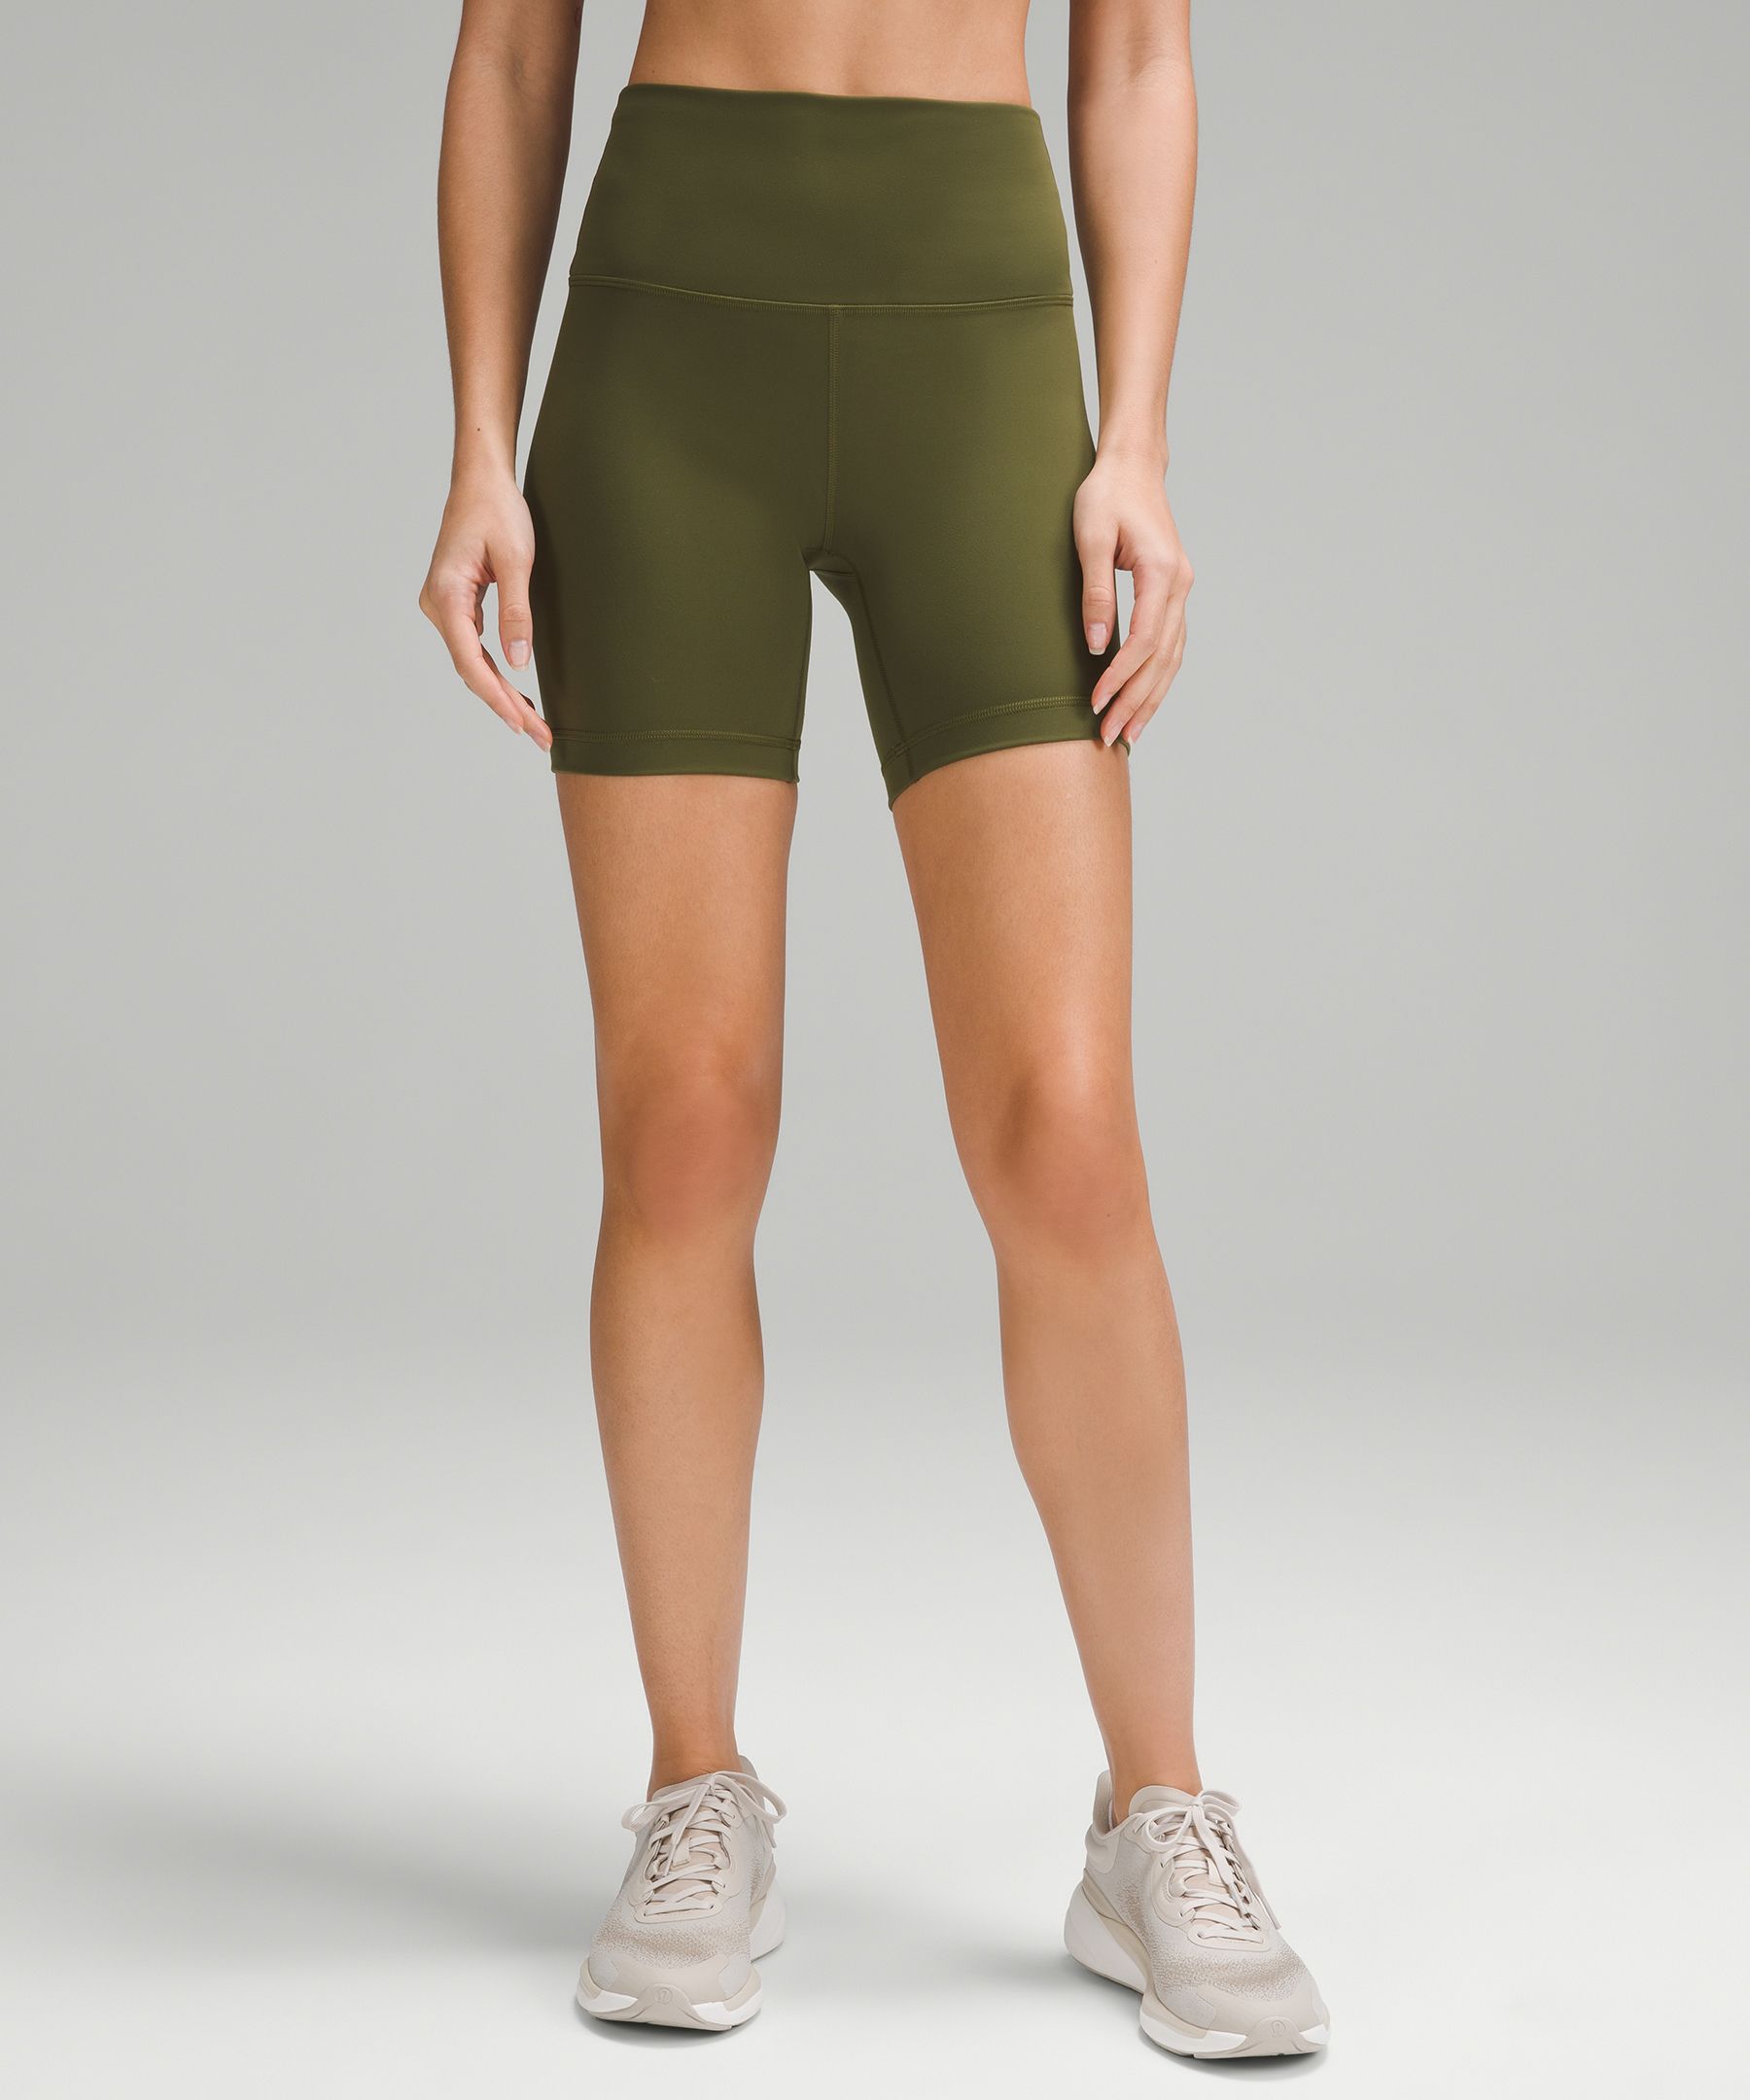 lululemon - Align Shorts 4” on Designer Wardrobe